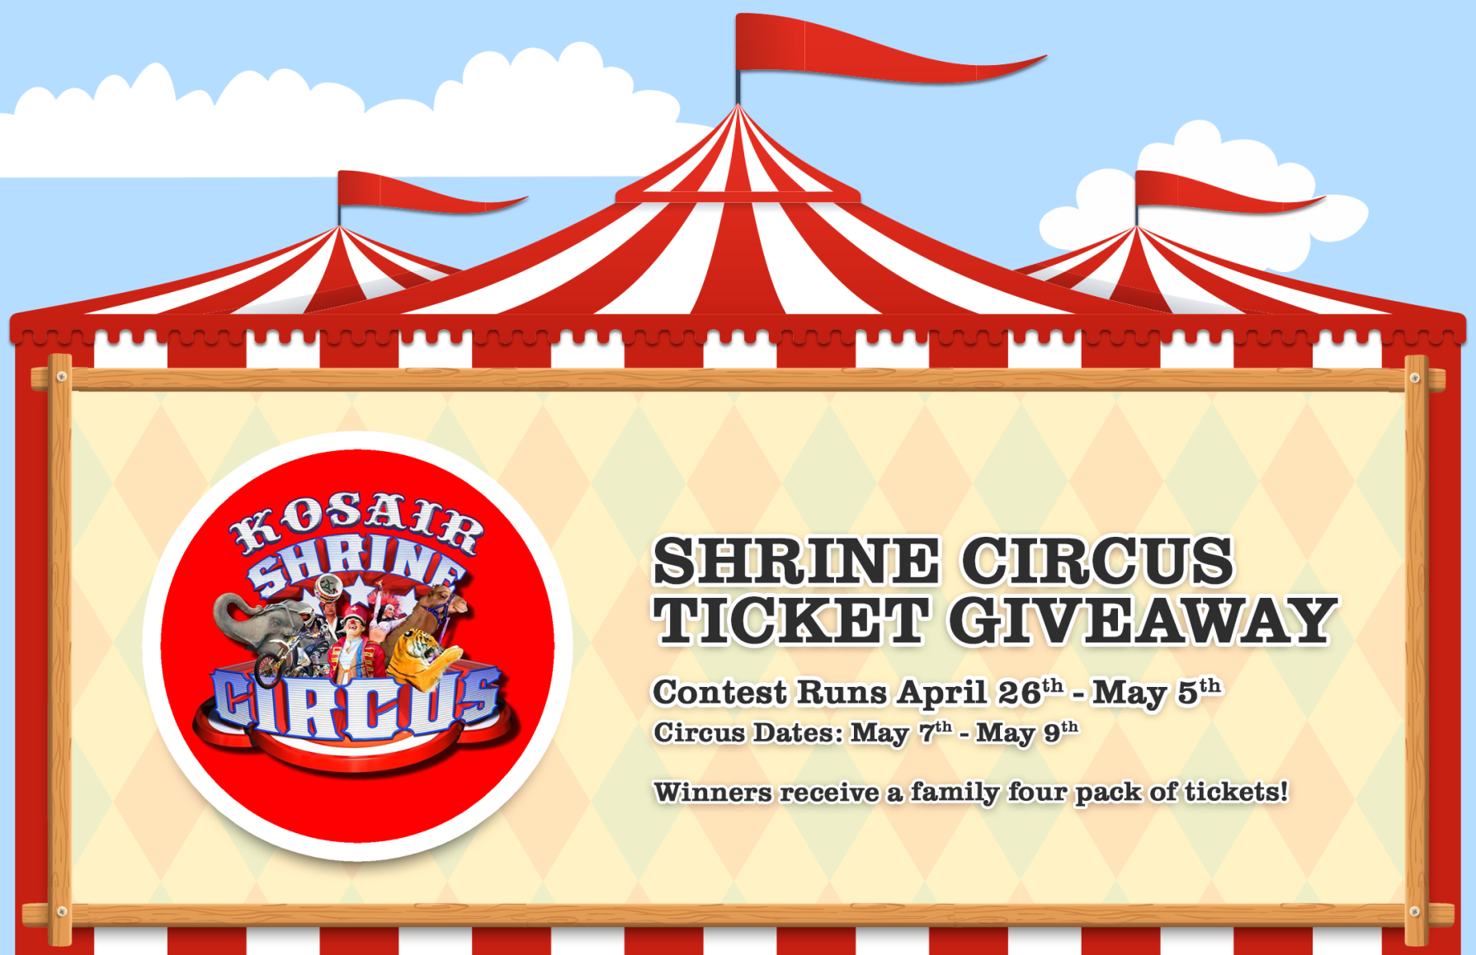 Kosair Shrine Circus Ticket Giveaway